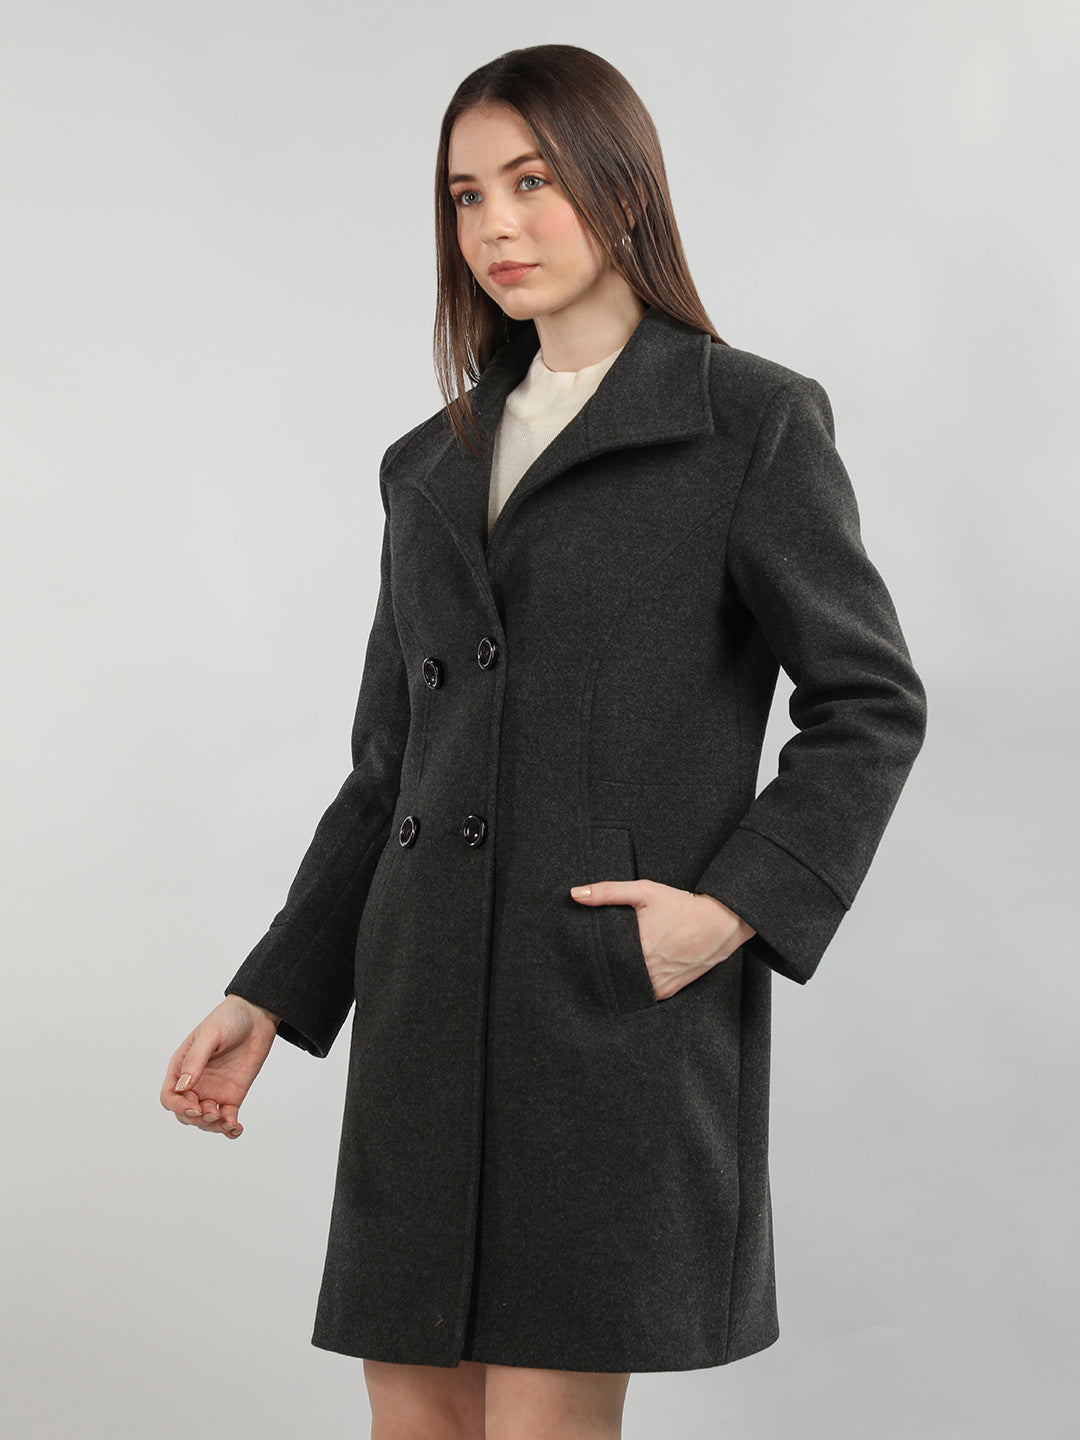 Women's Winter Coat -Charcoal Melange – PLAGG